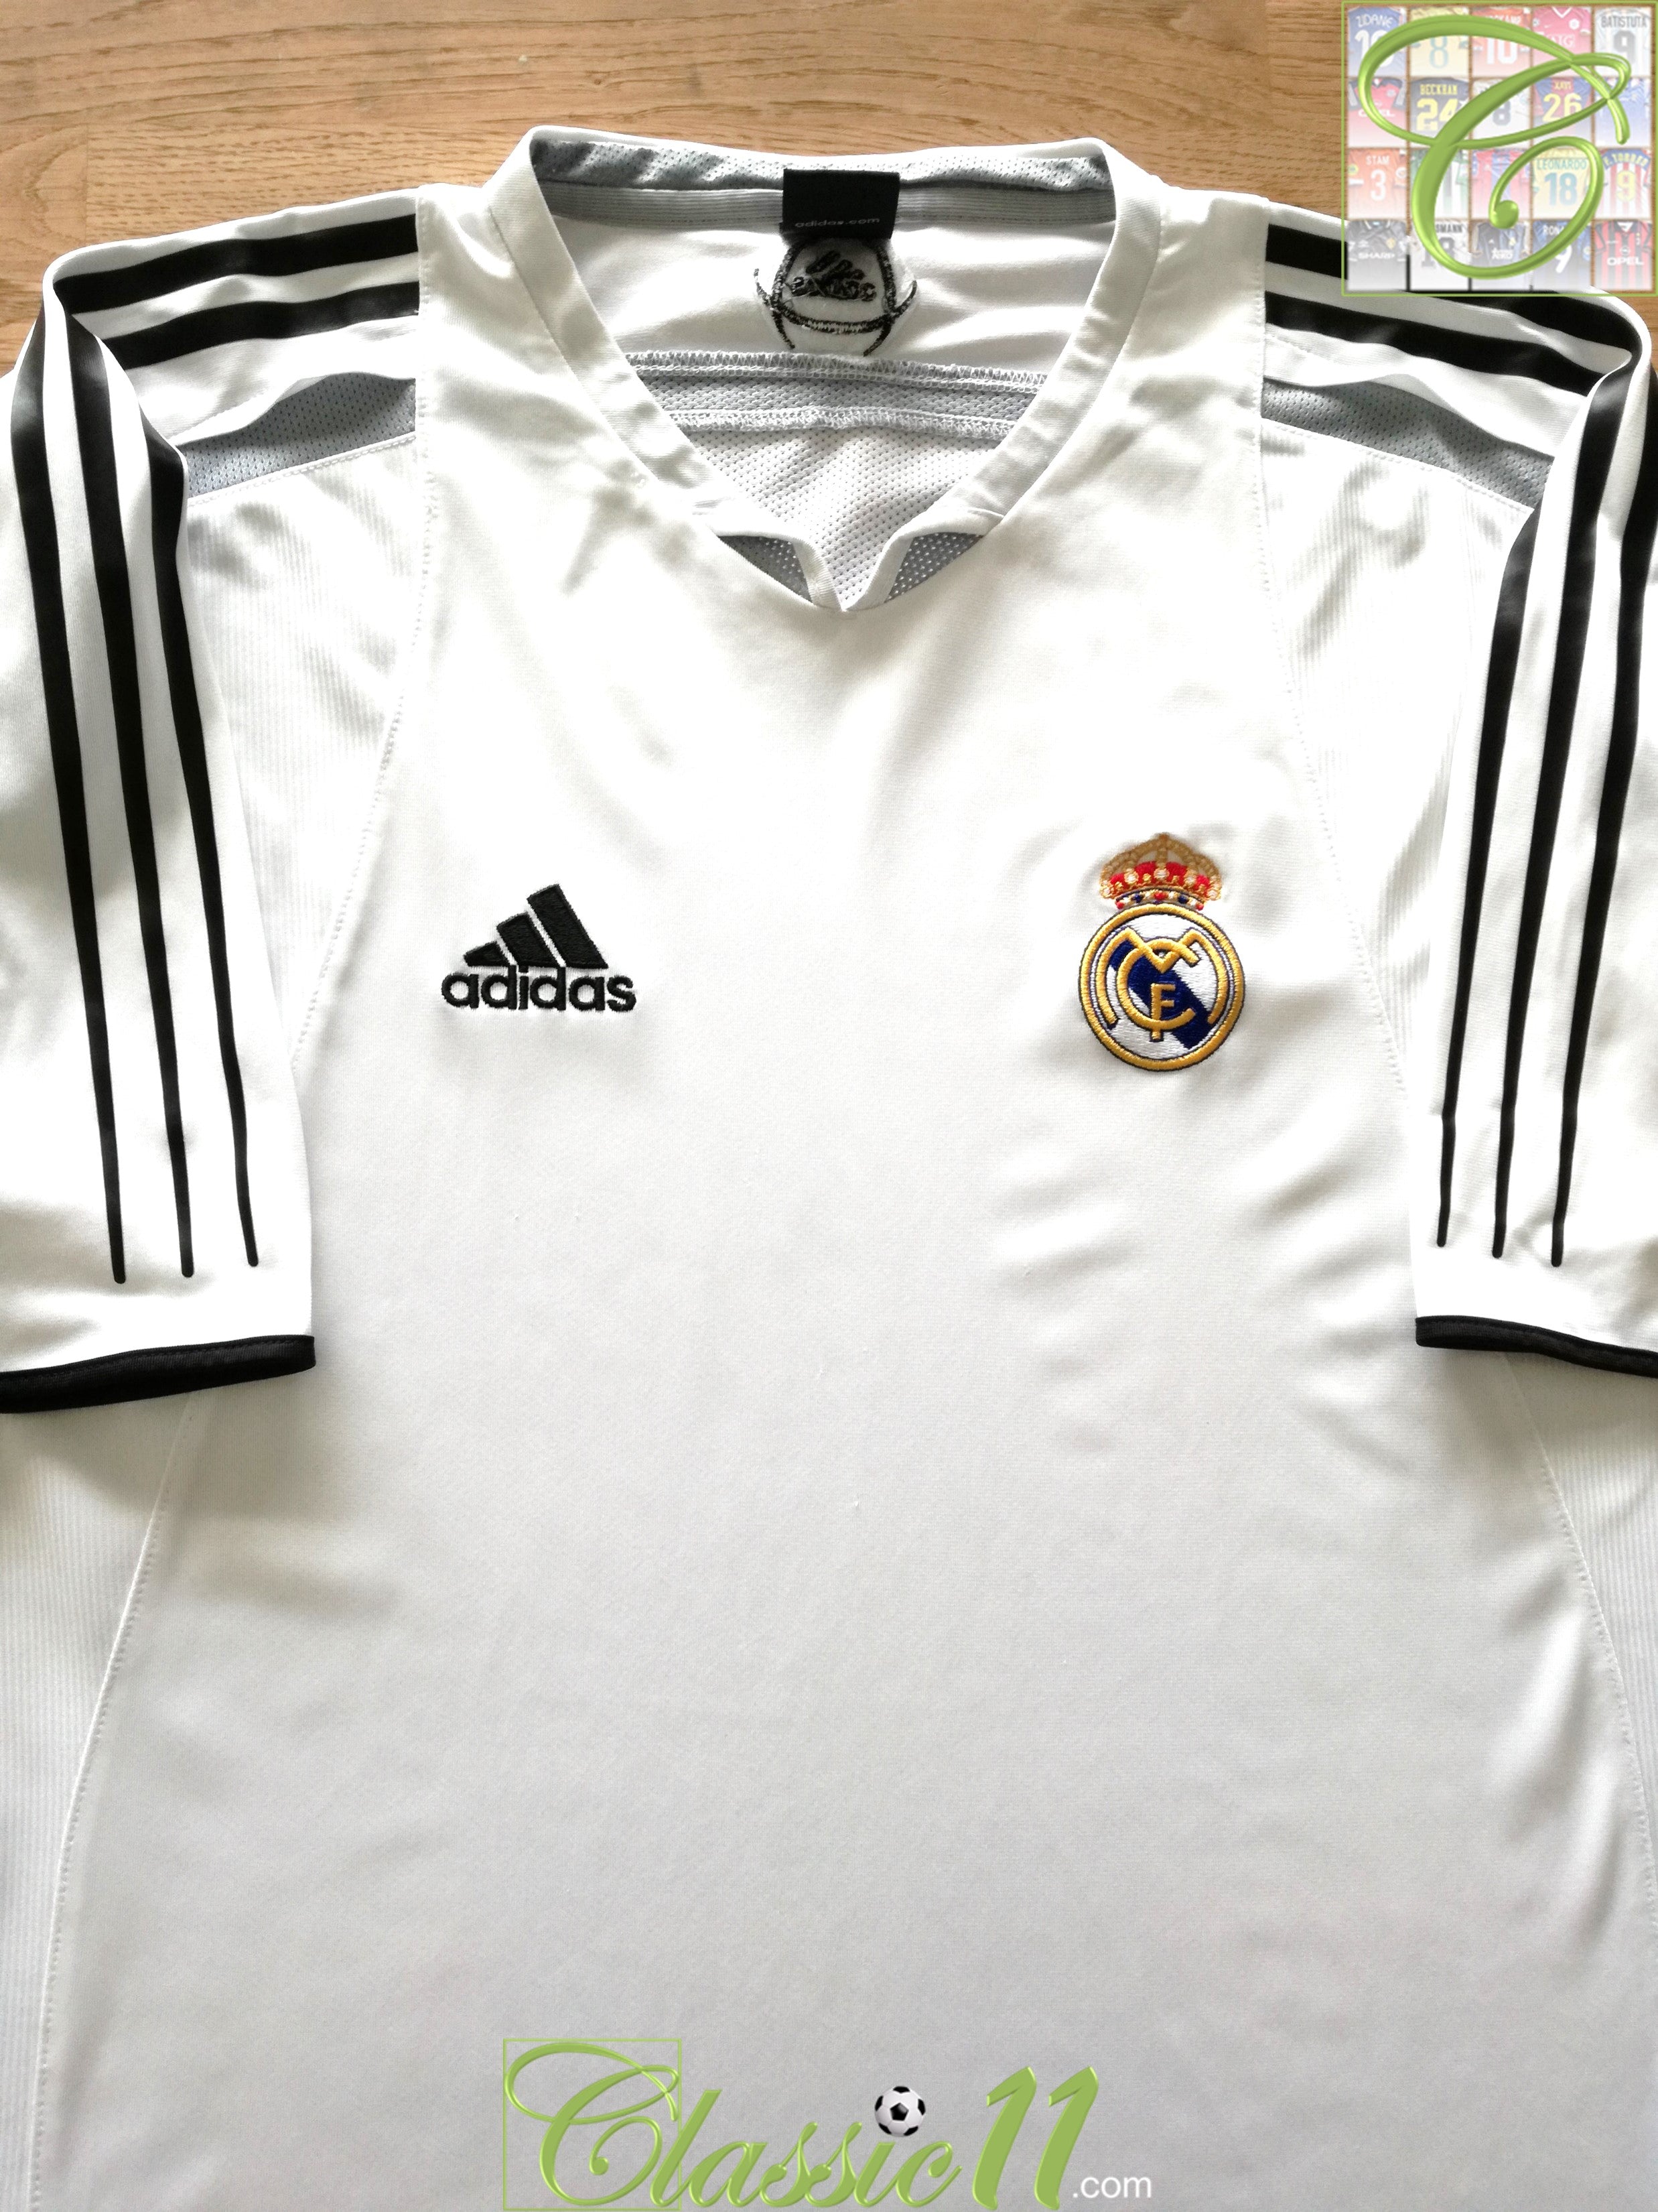 Vintage Real Madrid Jersey